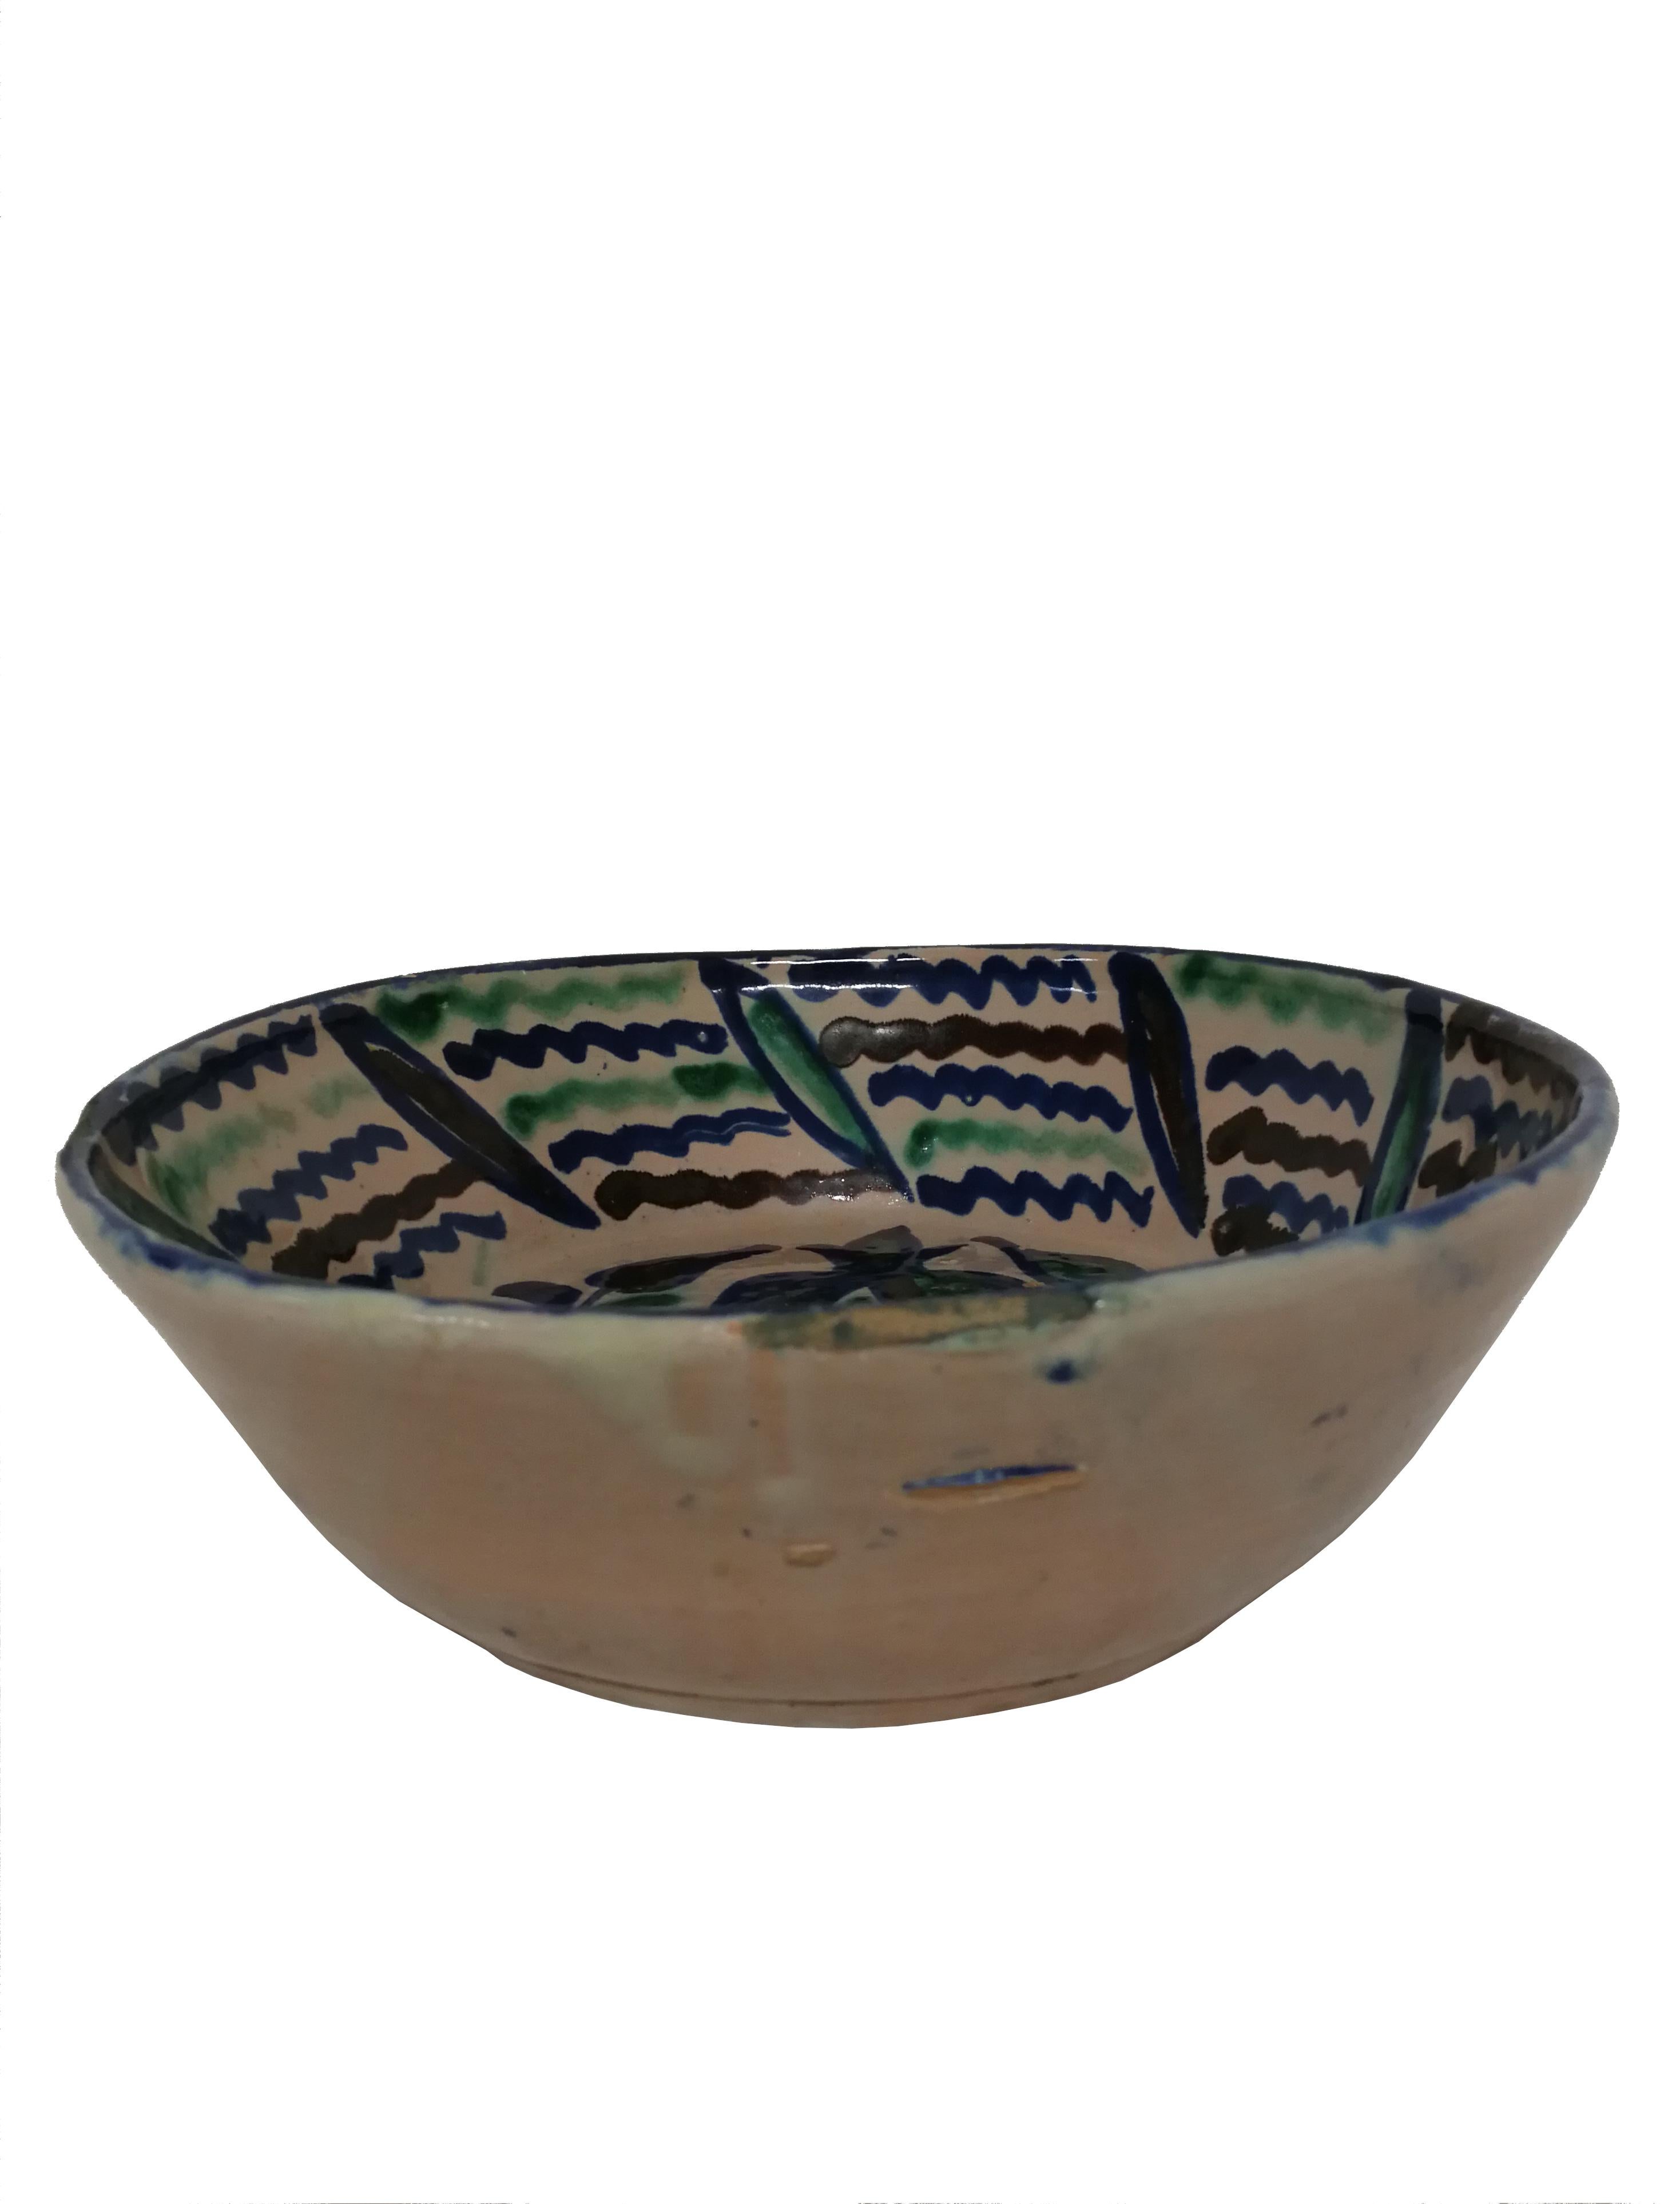 Ceramic Big Ancient Fajalauza Bowl with Pomergranate, Circa 1900